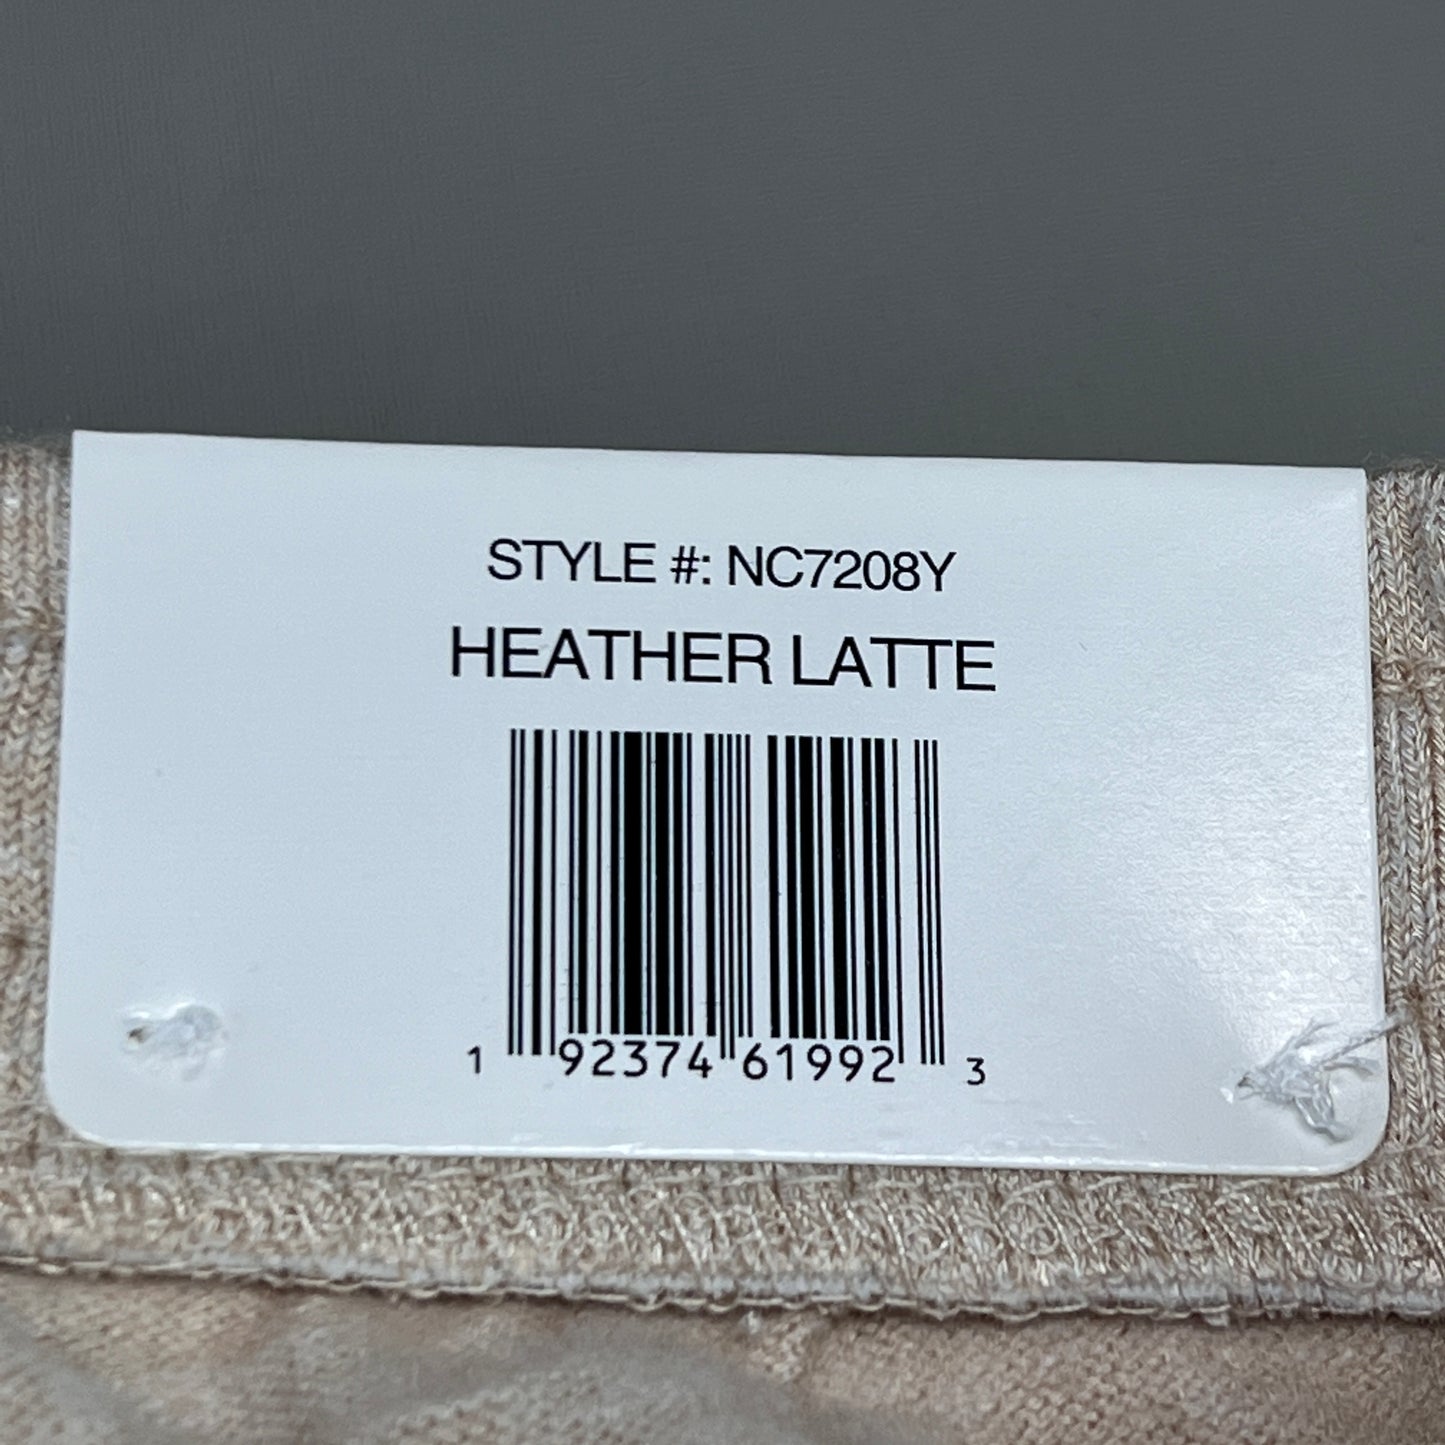 NATORI Soft Stretch Knit Lounge Pant Ankle Length Women's Sz M Heather Latte NC7208Y (New)